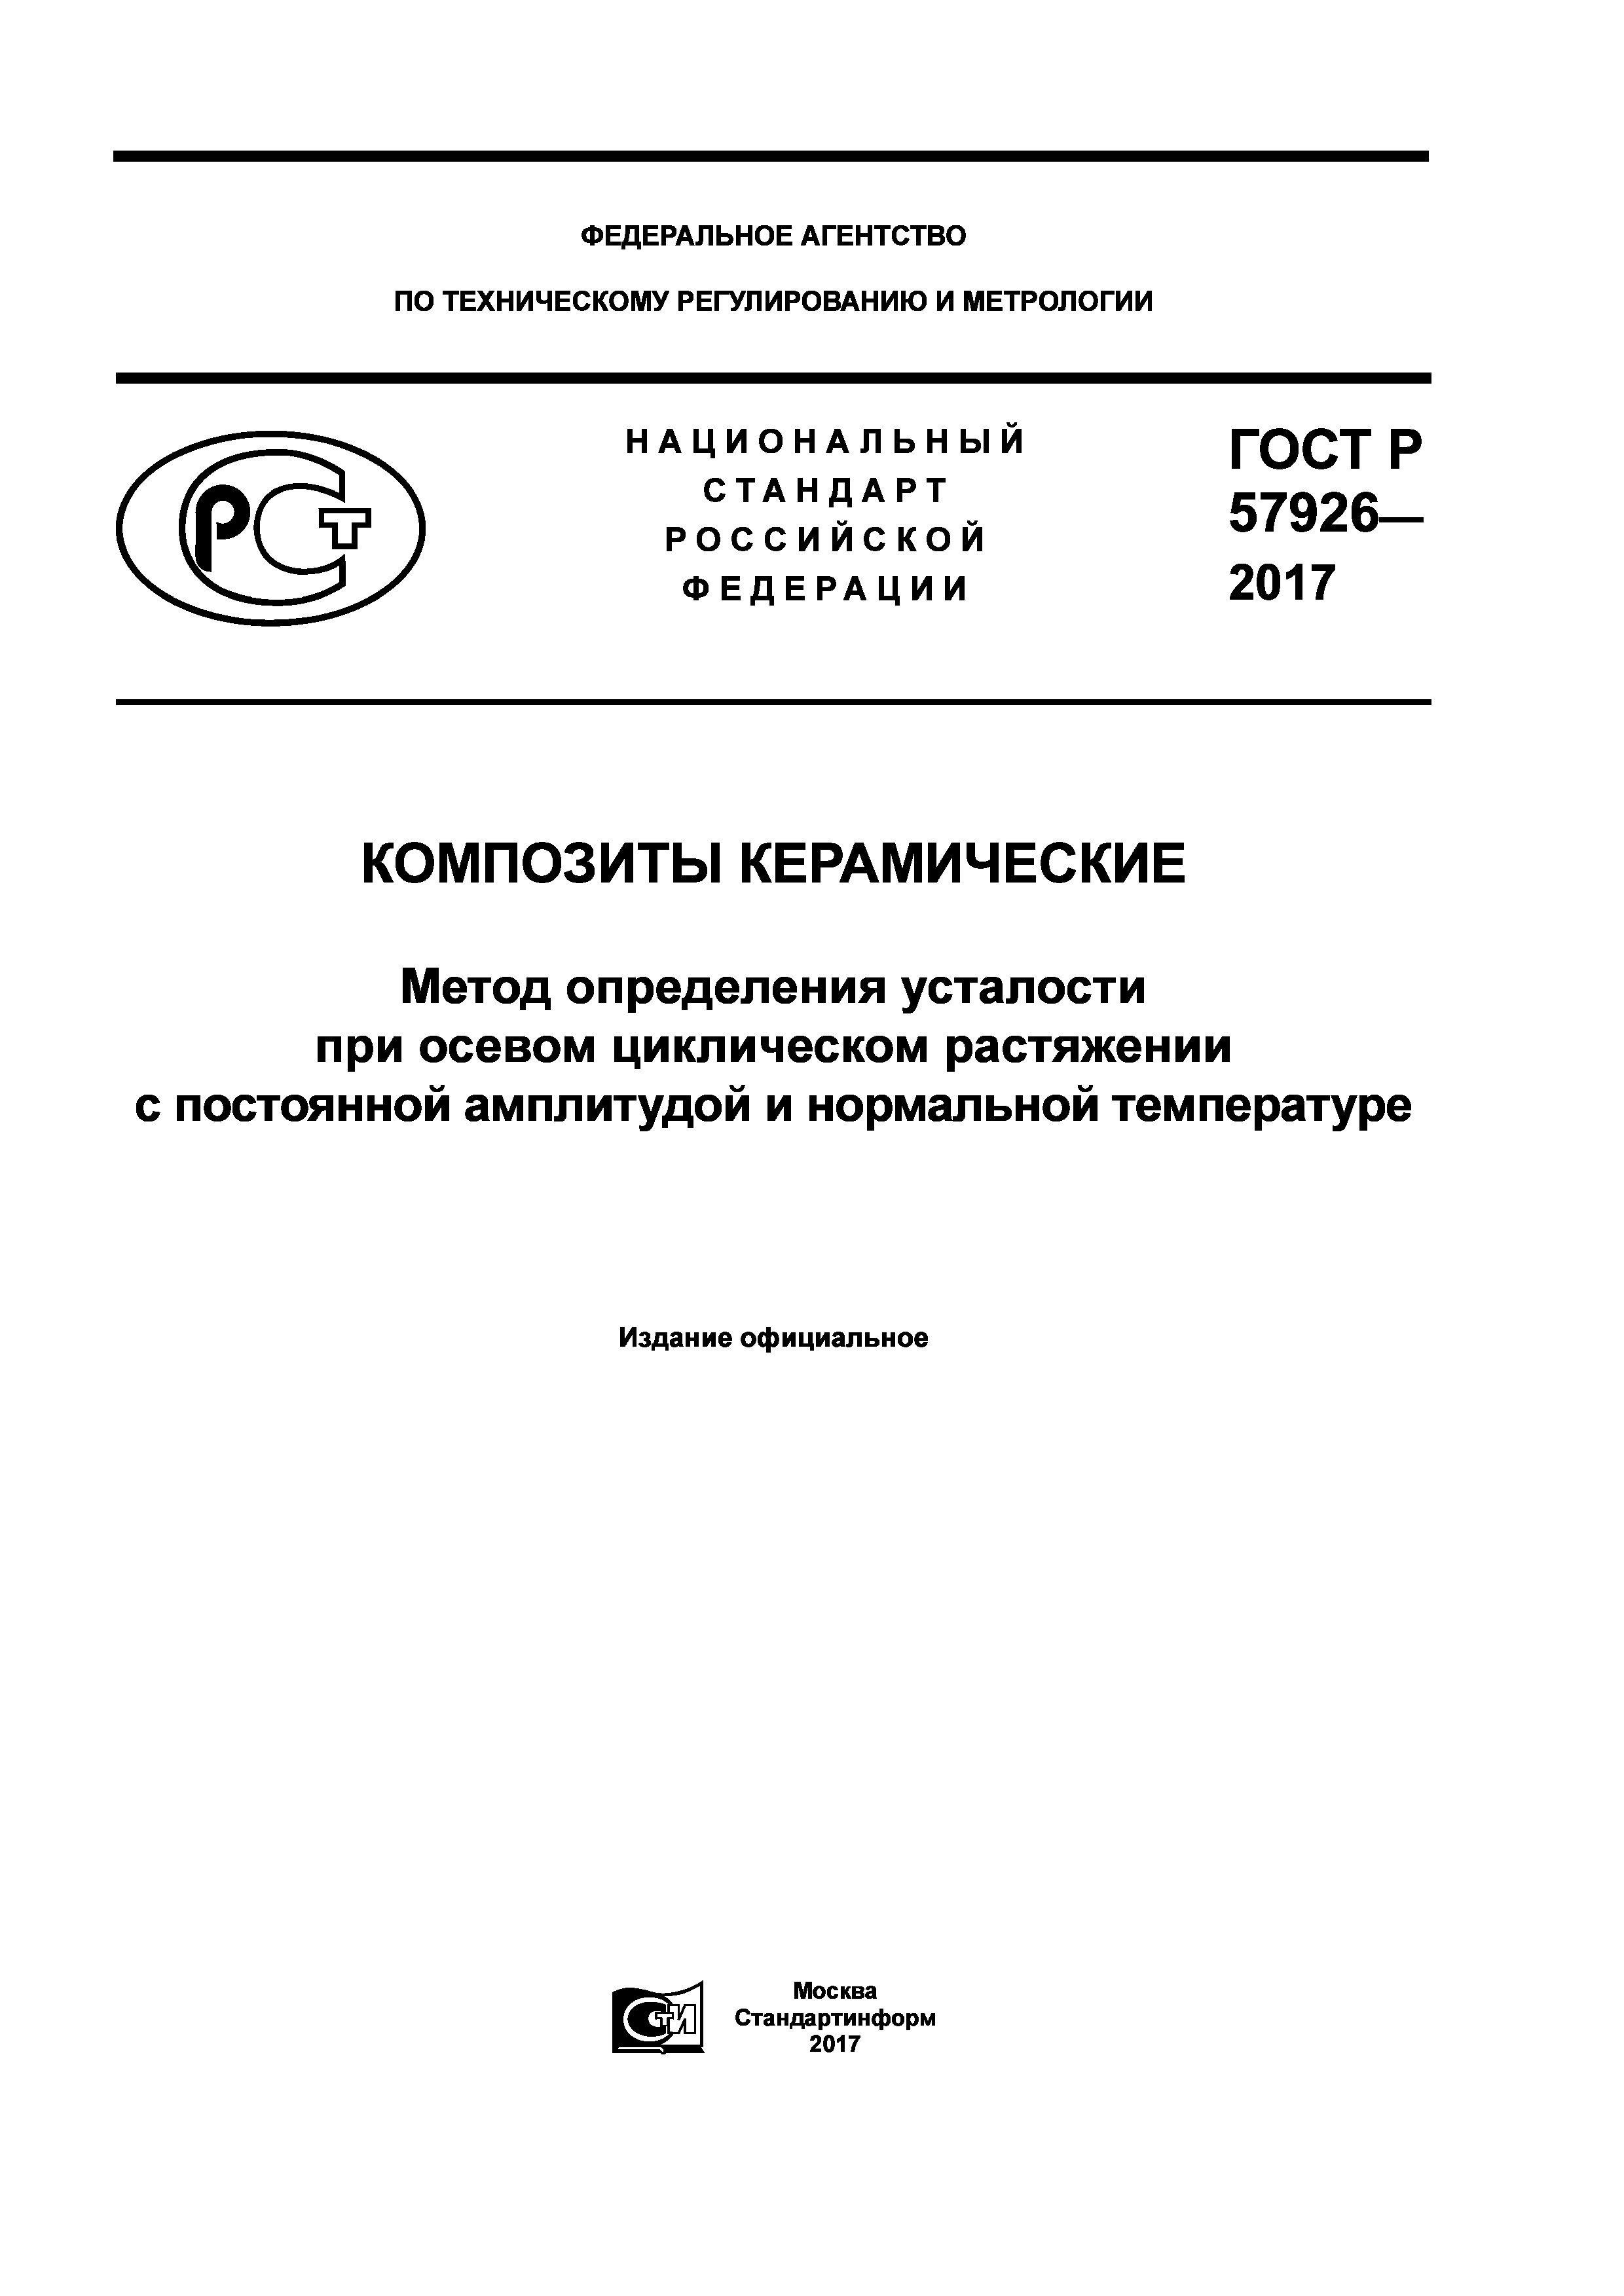 ГОСТ Р 57926-2017